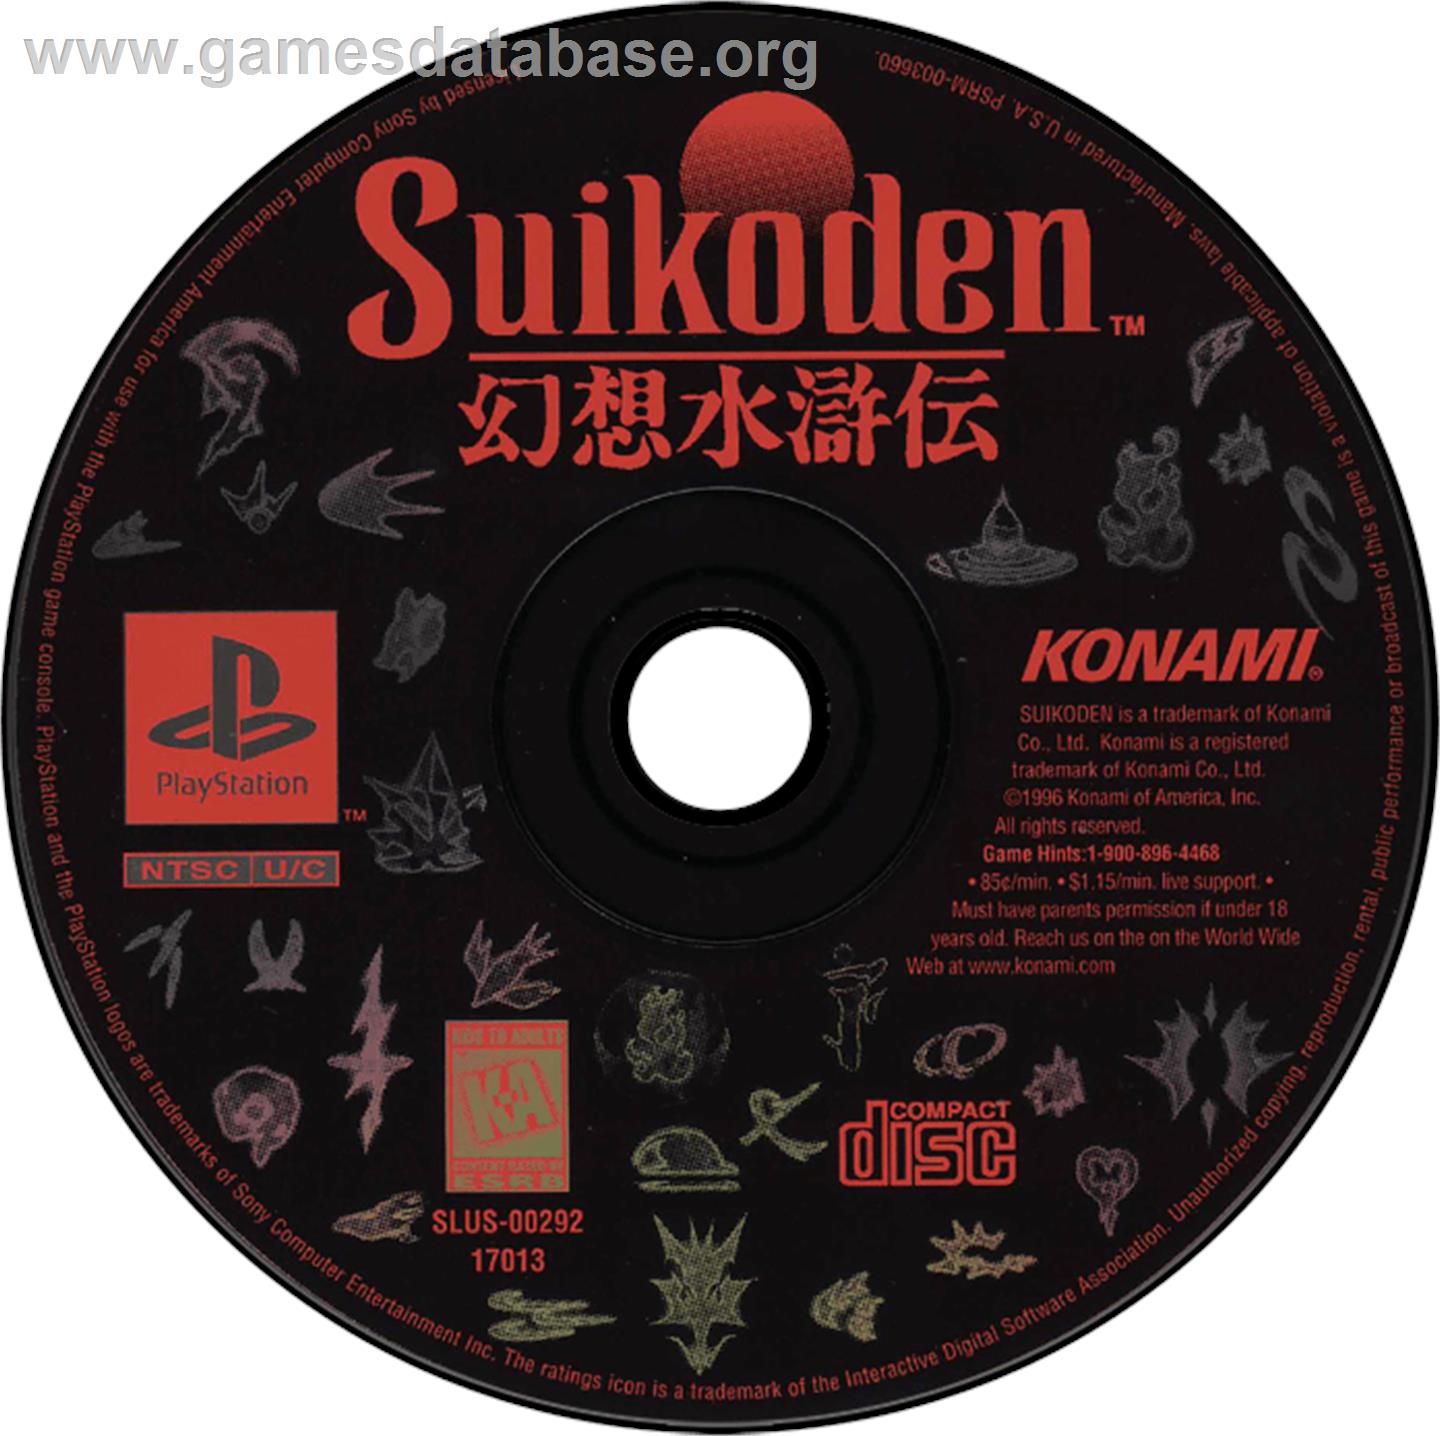 Suikoden - Sony Playstation - Artwork - Disc